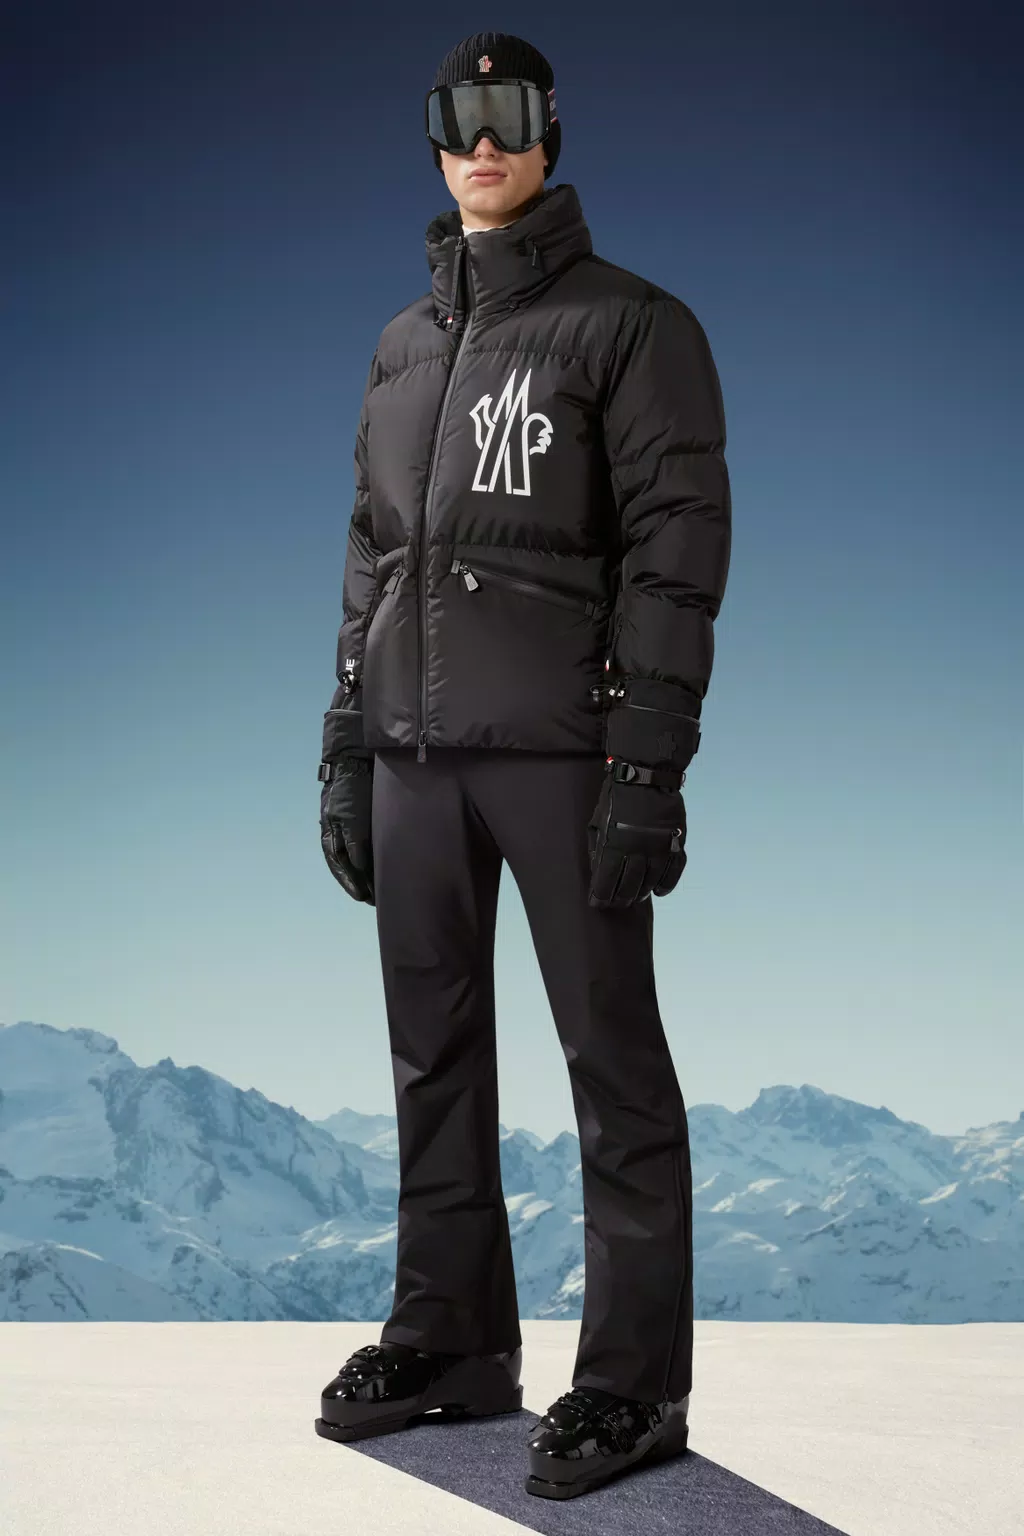 Chaqueta impermeable para hombre, abrigo con capucha para esquí y nieve,  cazadora para Snowboard de montaña, impermeable con capucha, prendas de